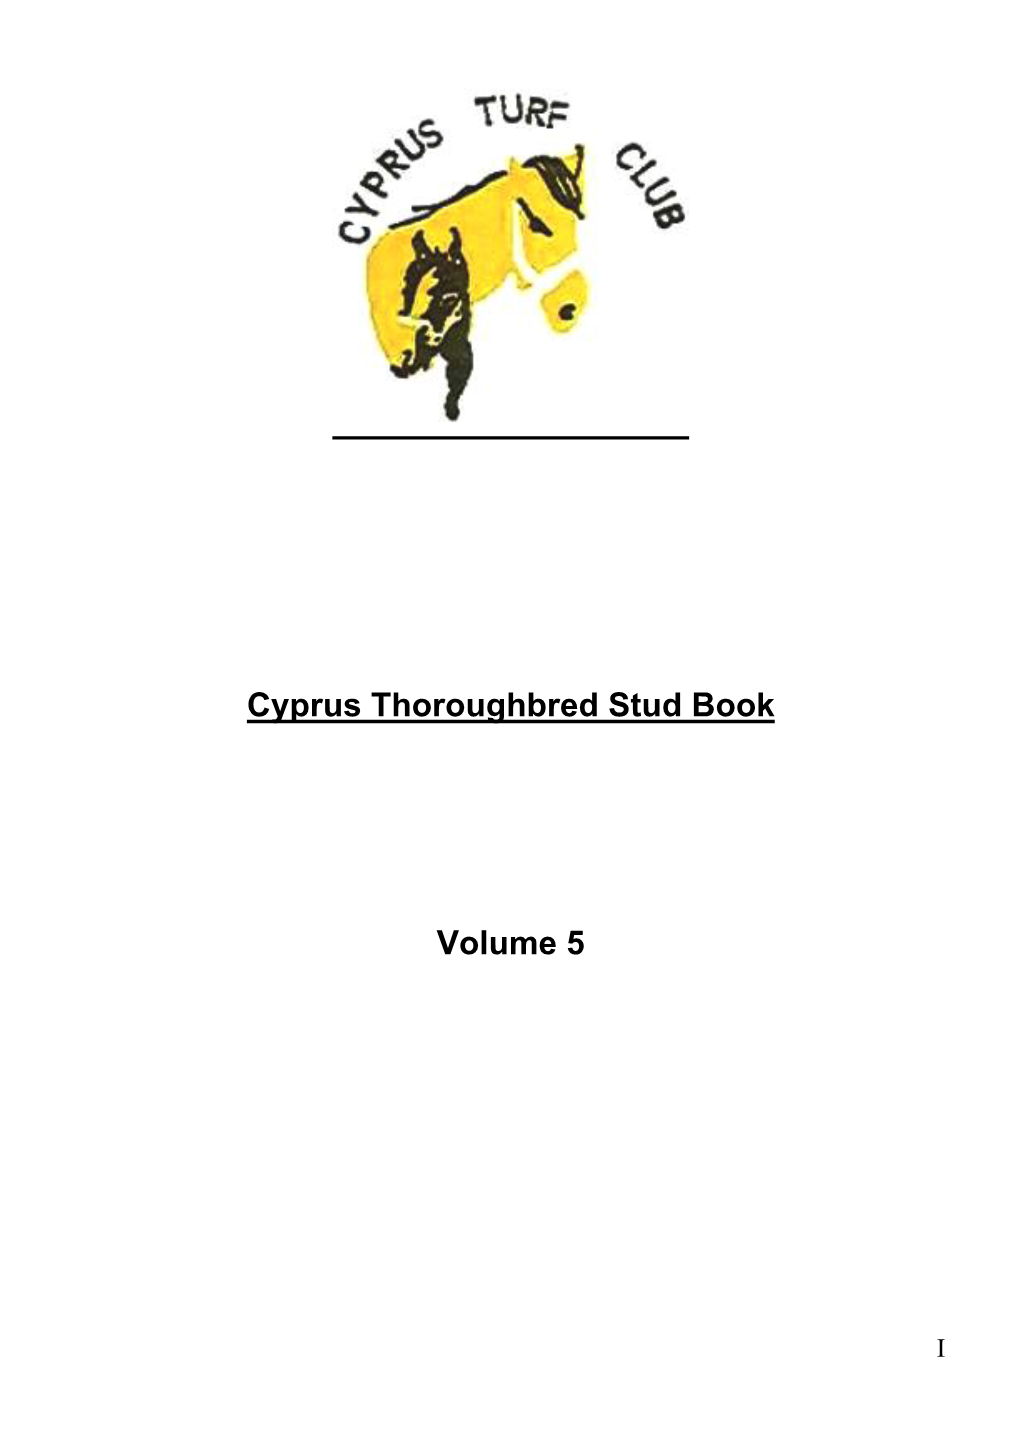 Cyprus Thoroughbred Stud Book Volume 5